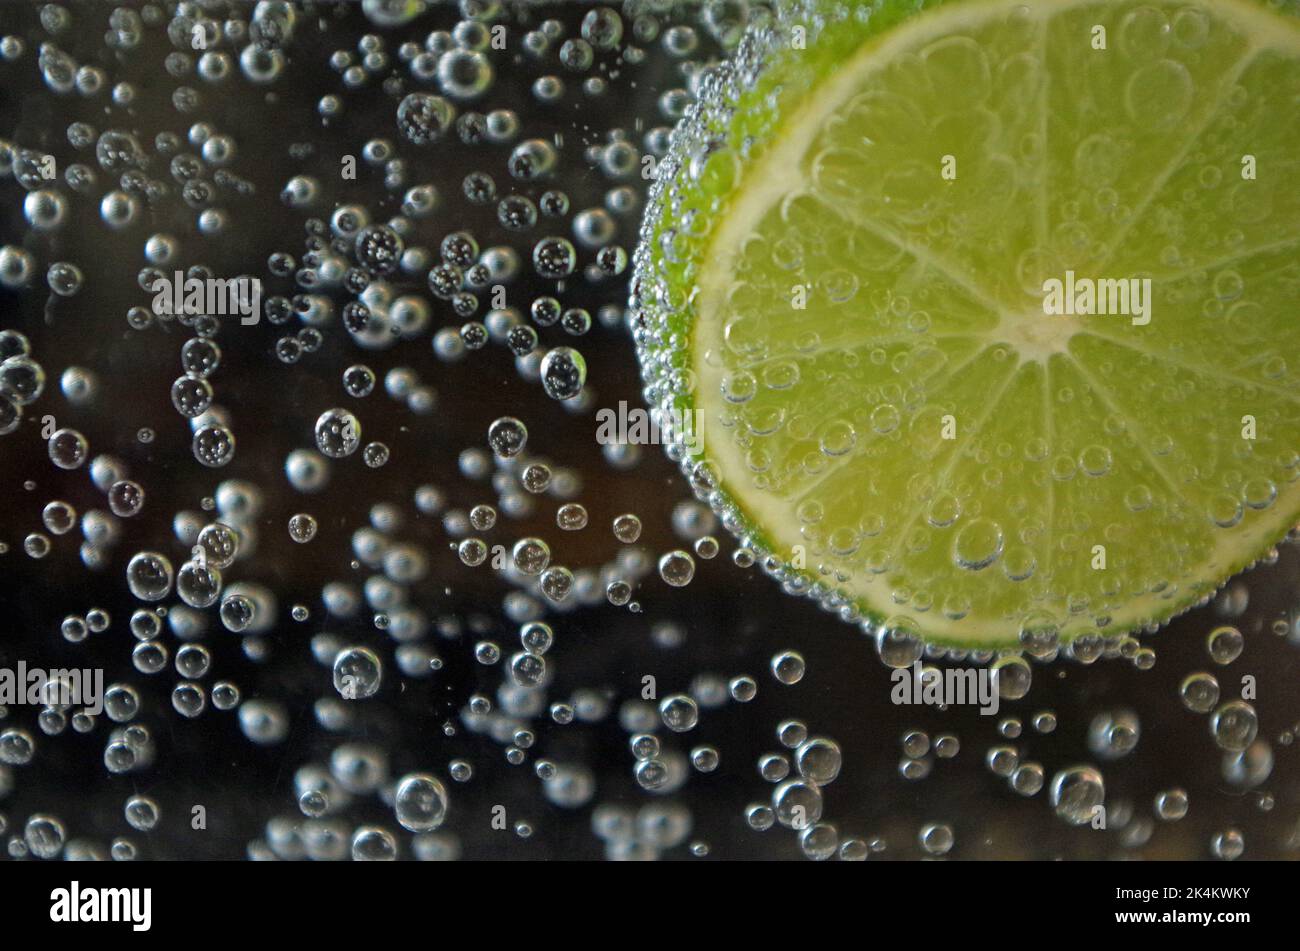 Anidride carbonica insieme ad un limone. Foto Stock